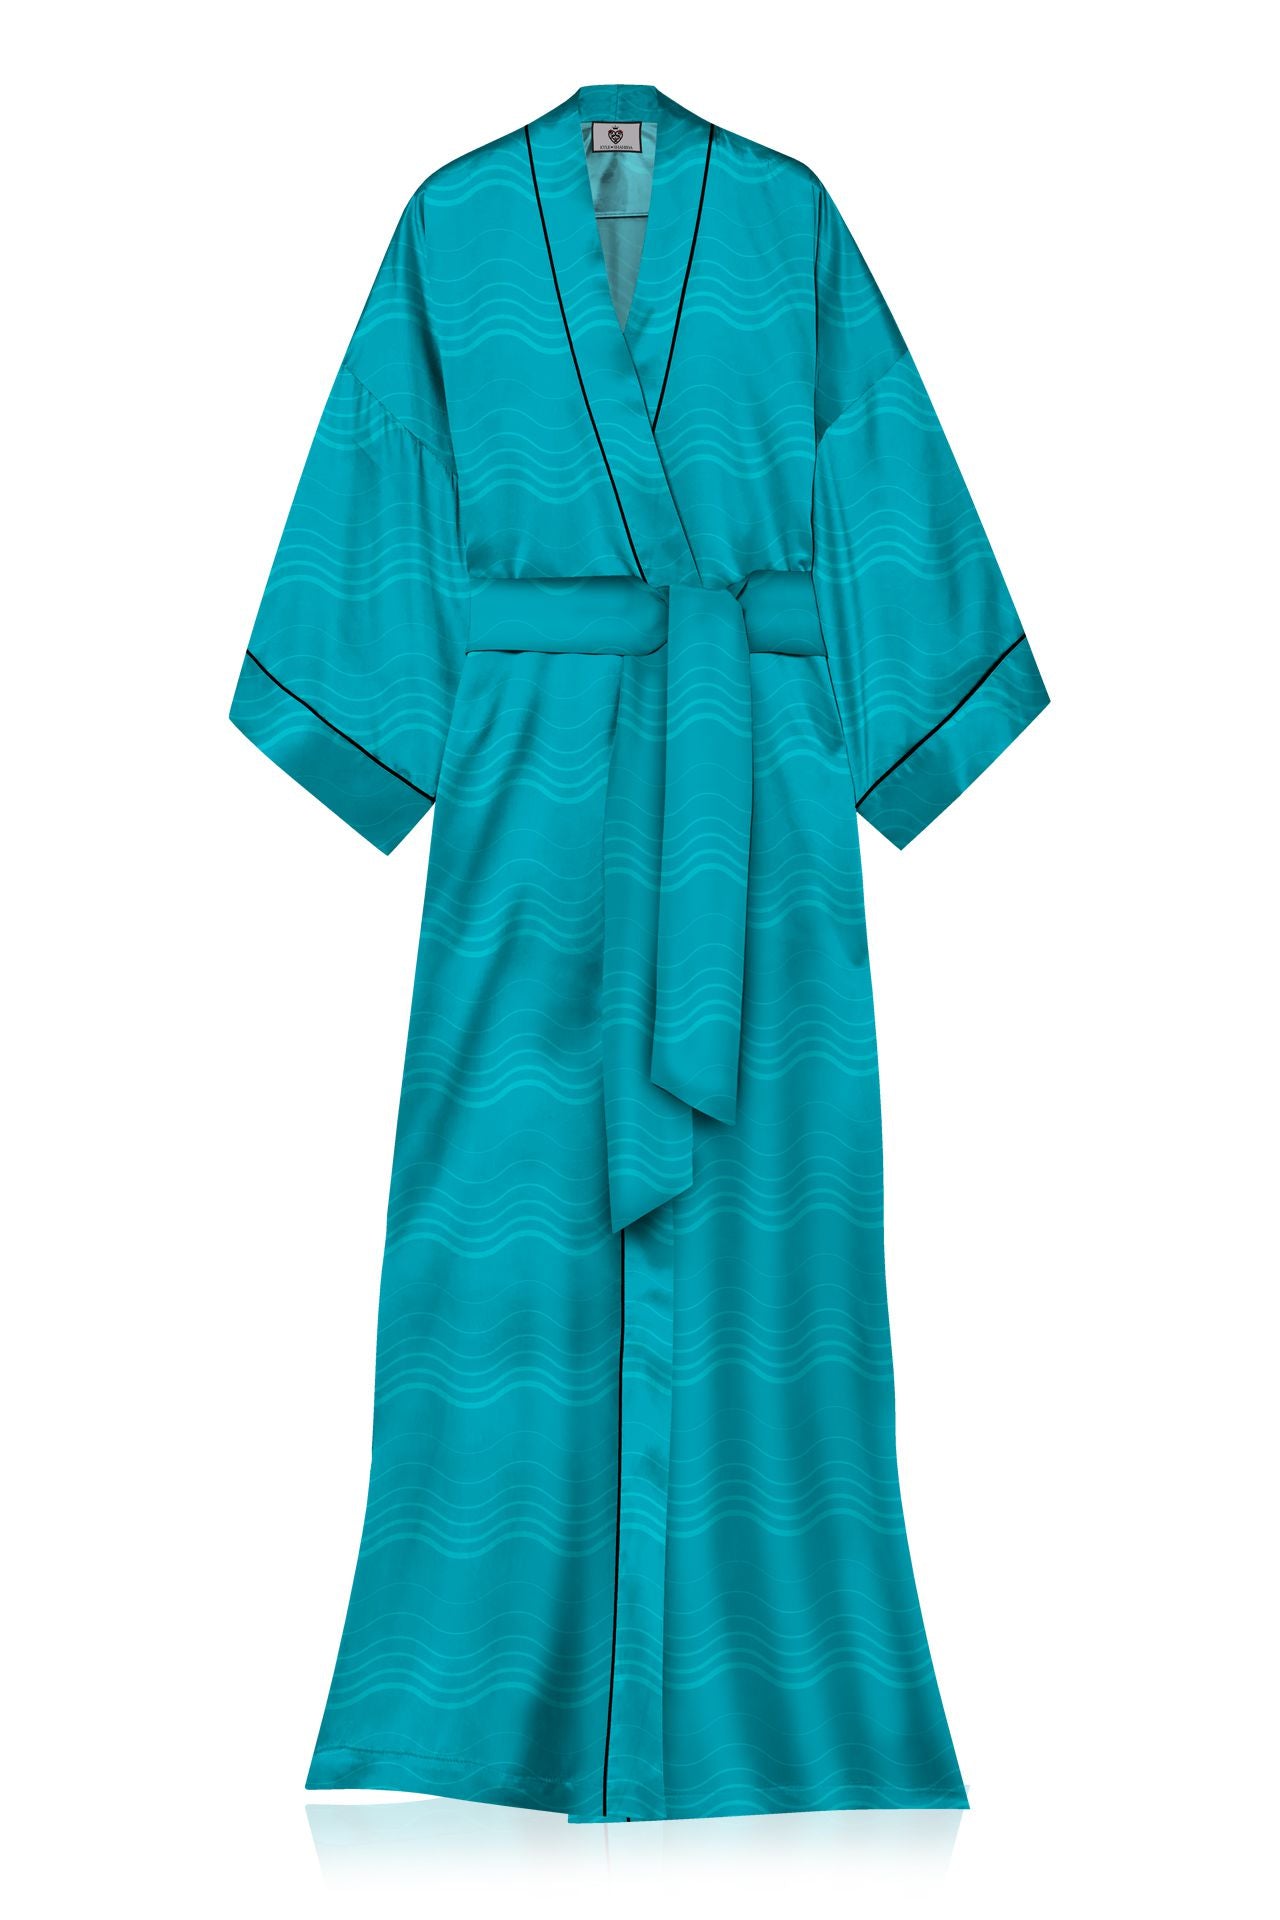 "light blue robes" "Kyle X Shahida" "silk robes and kimonos" "luxury kimono"